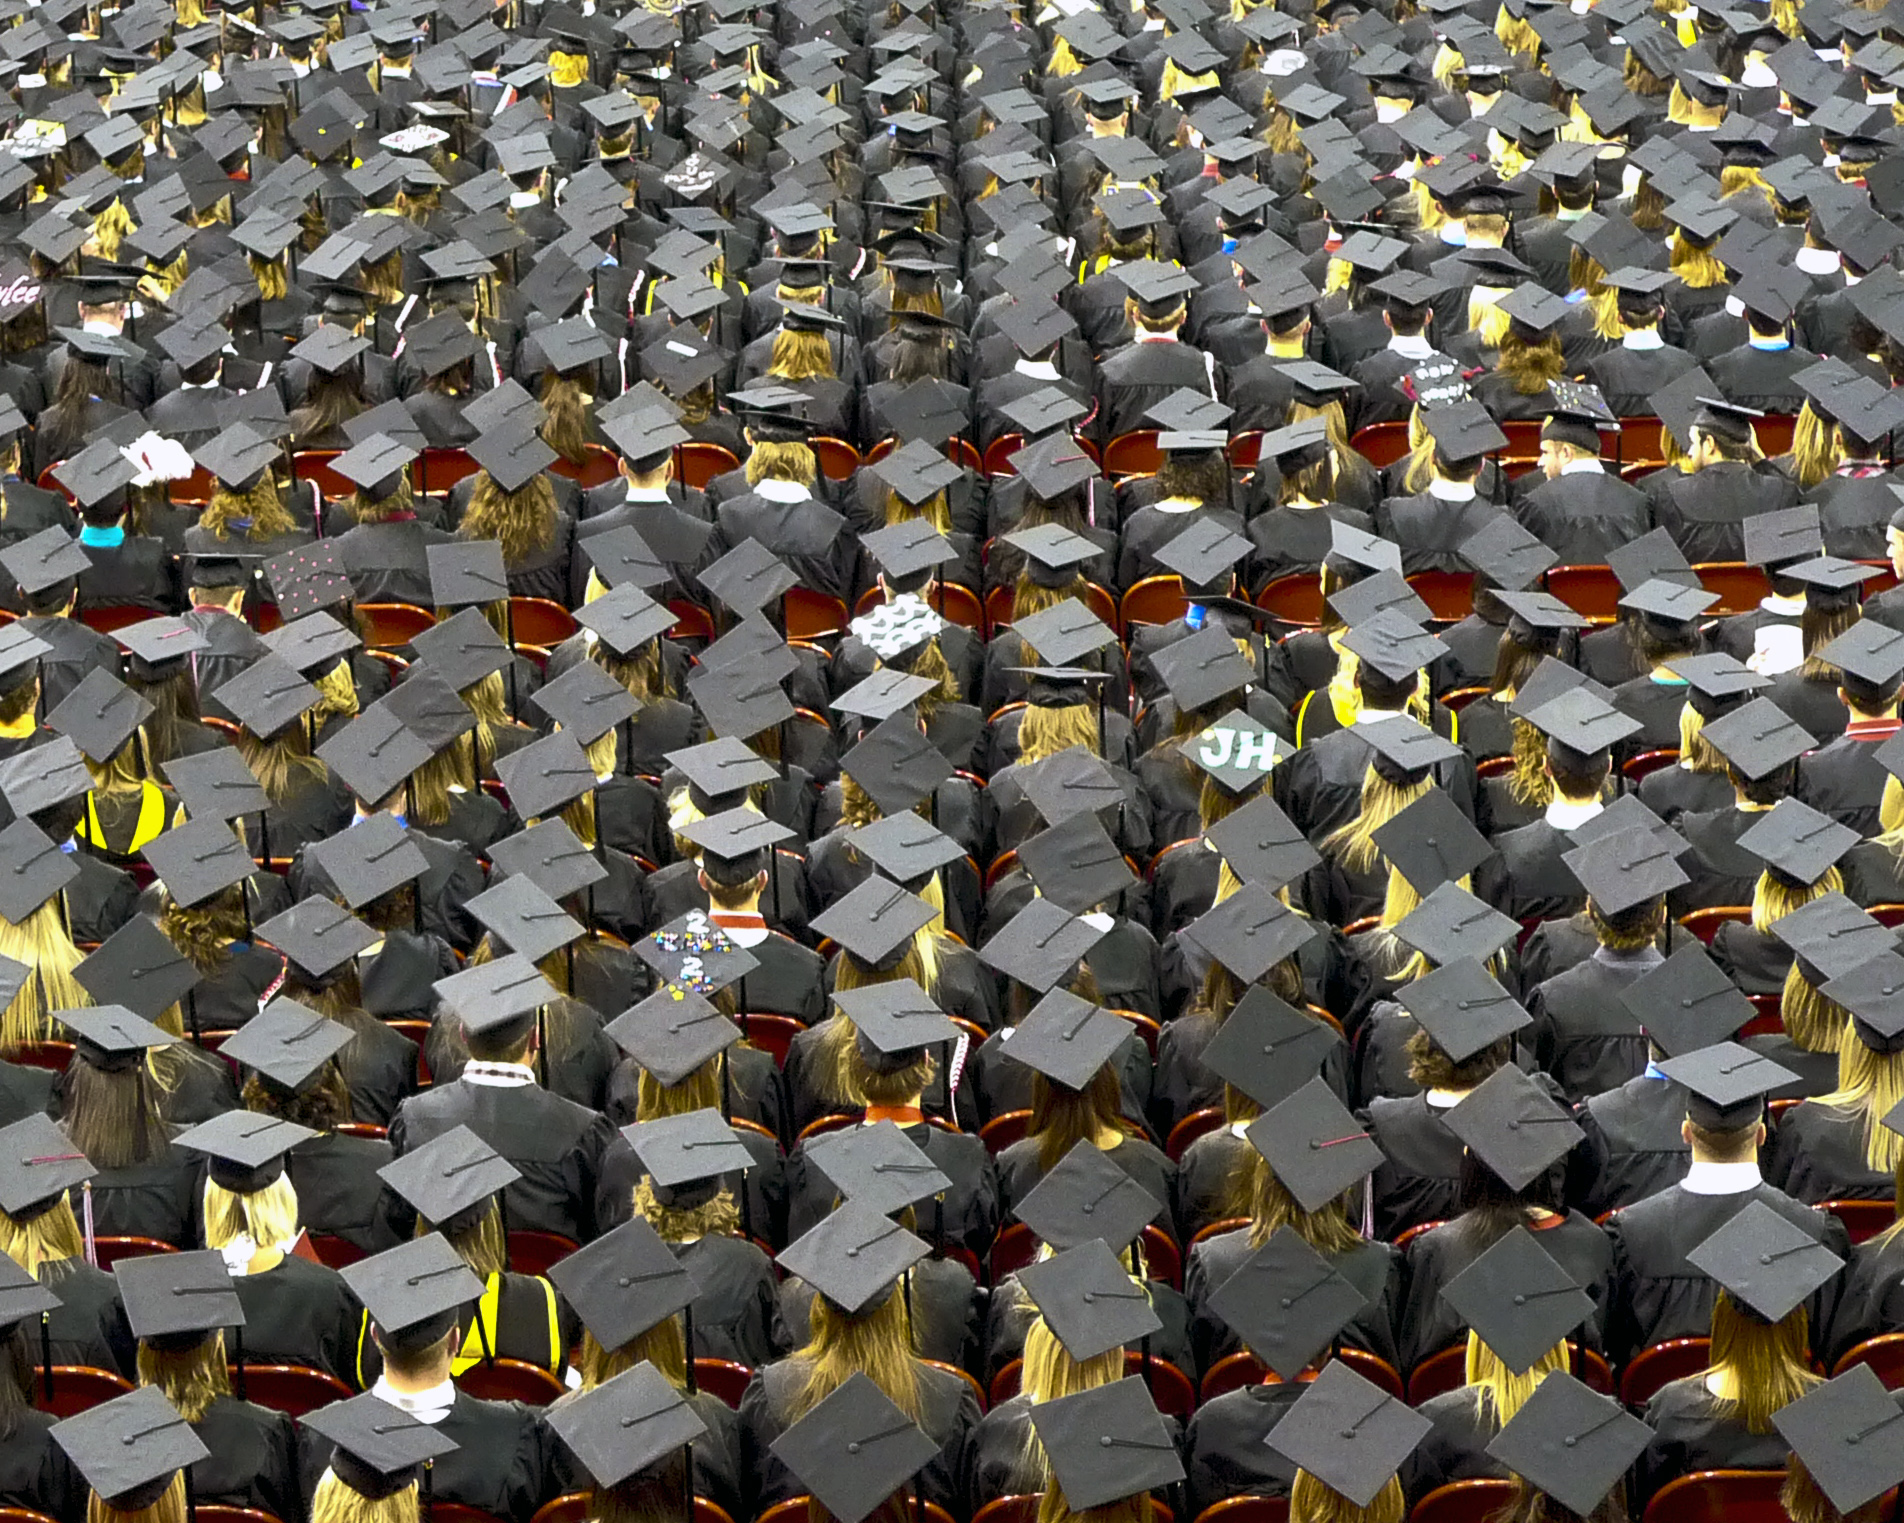 Sooner Than We Think – Should Graduation Be At BHS or NIU?